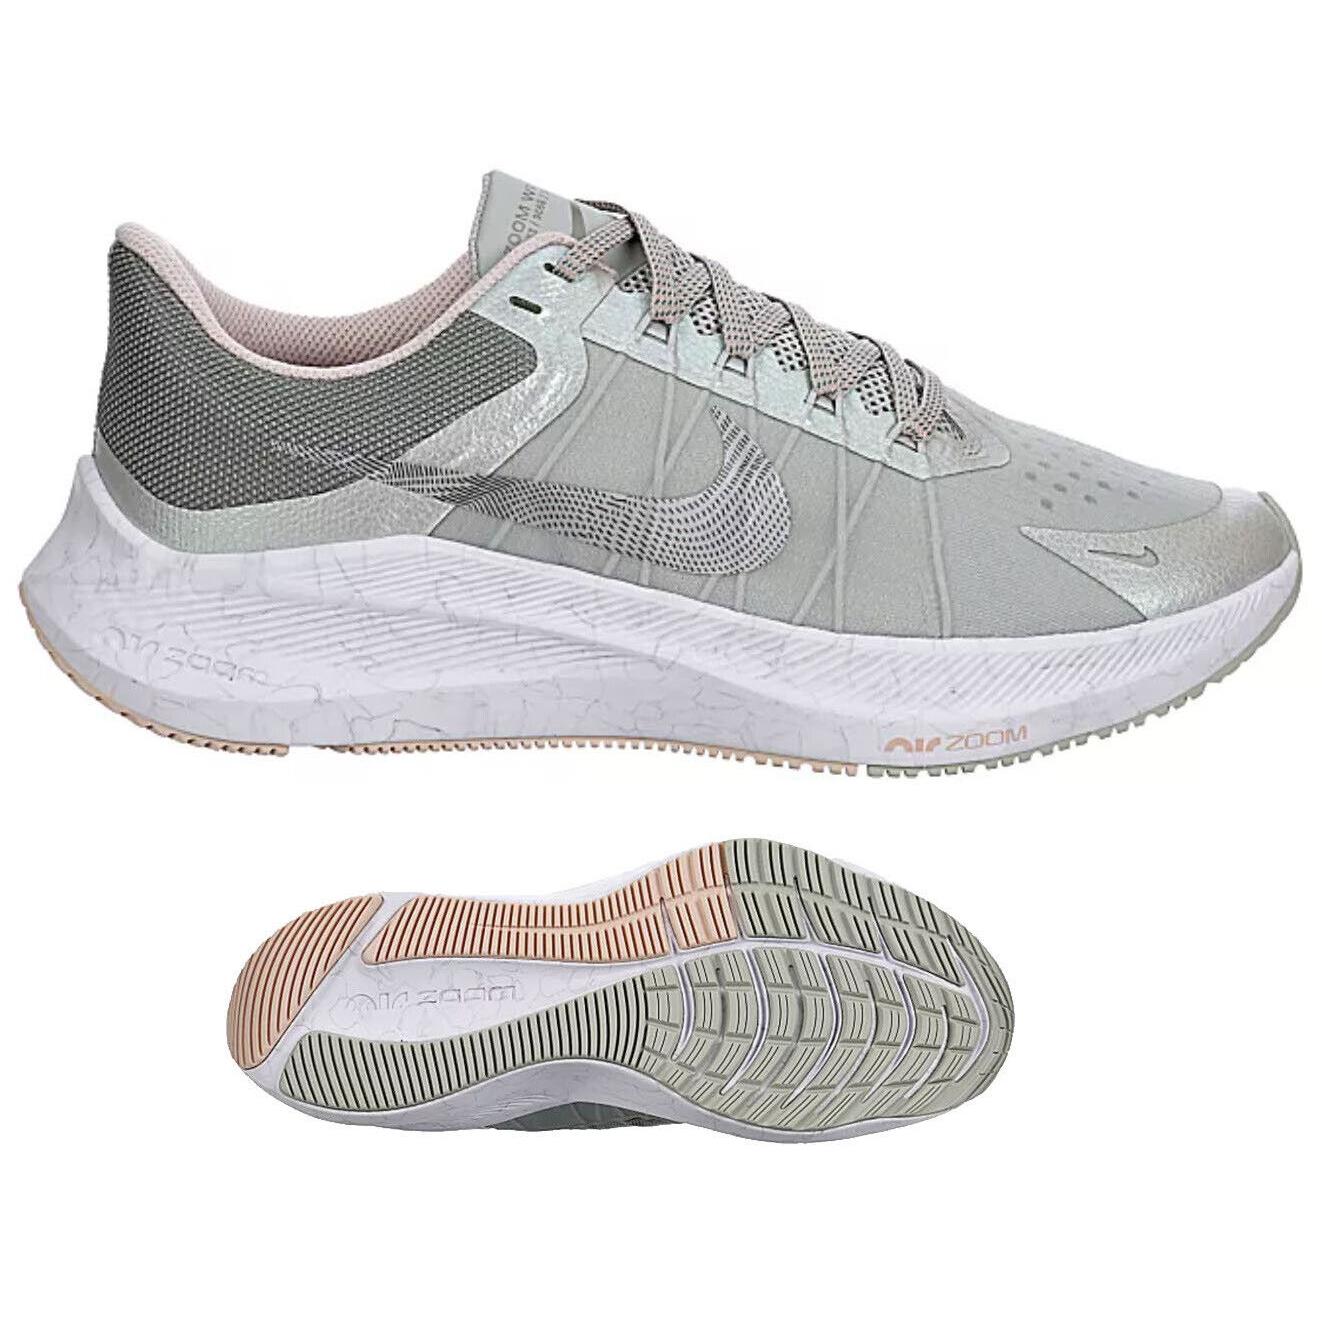 Nike Casual Running Shoes Gym Train Women`s Sneakers Gray Metallic All Sizes